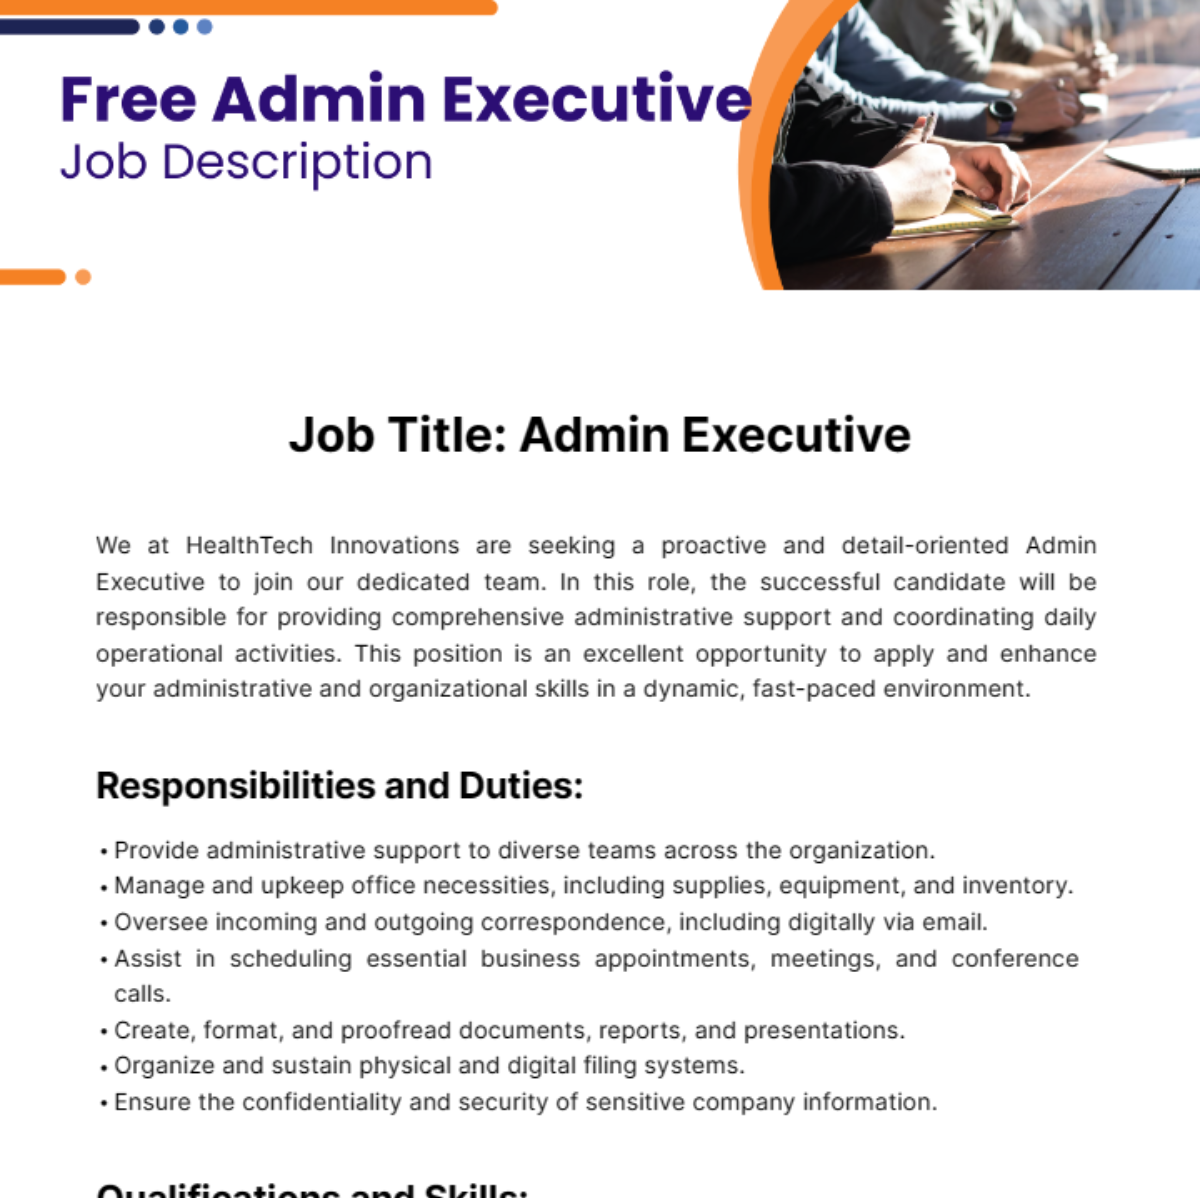 Free Admin Executive Job Description Template